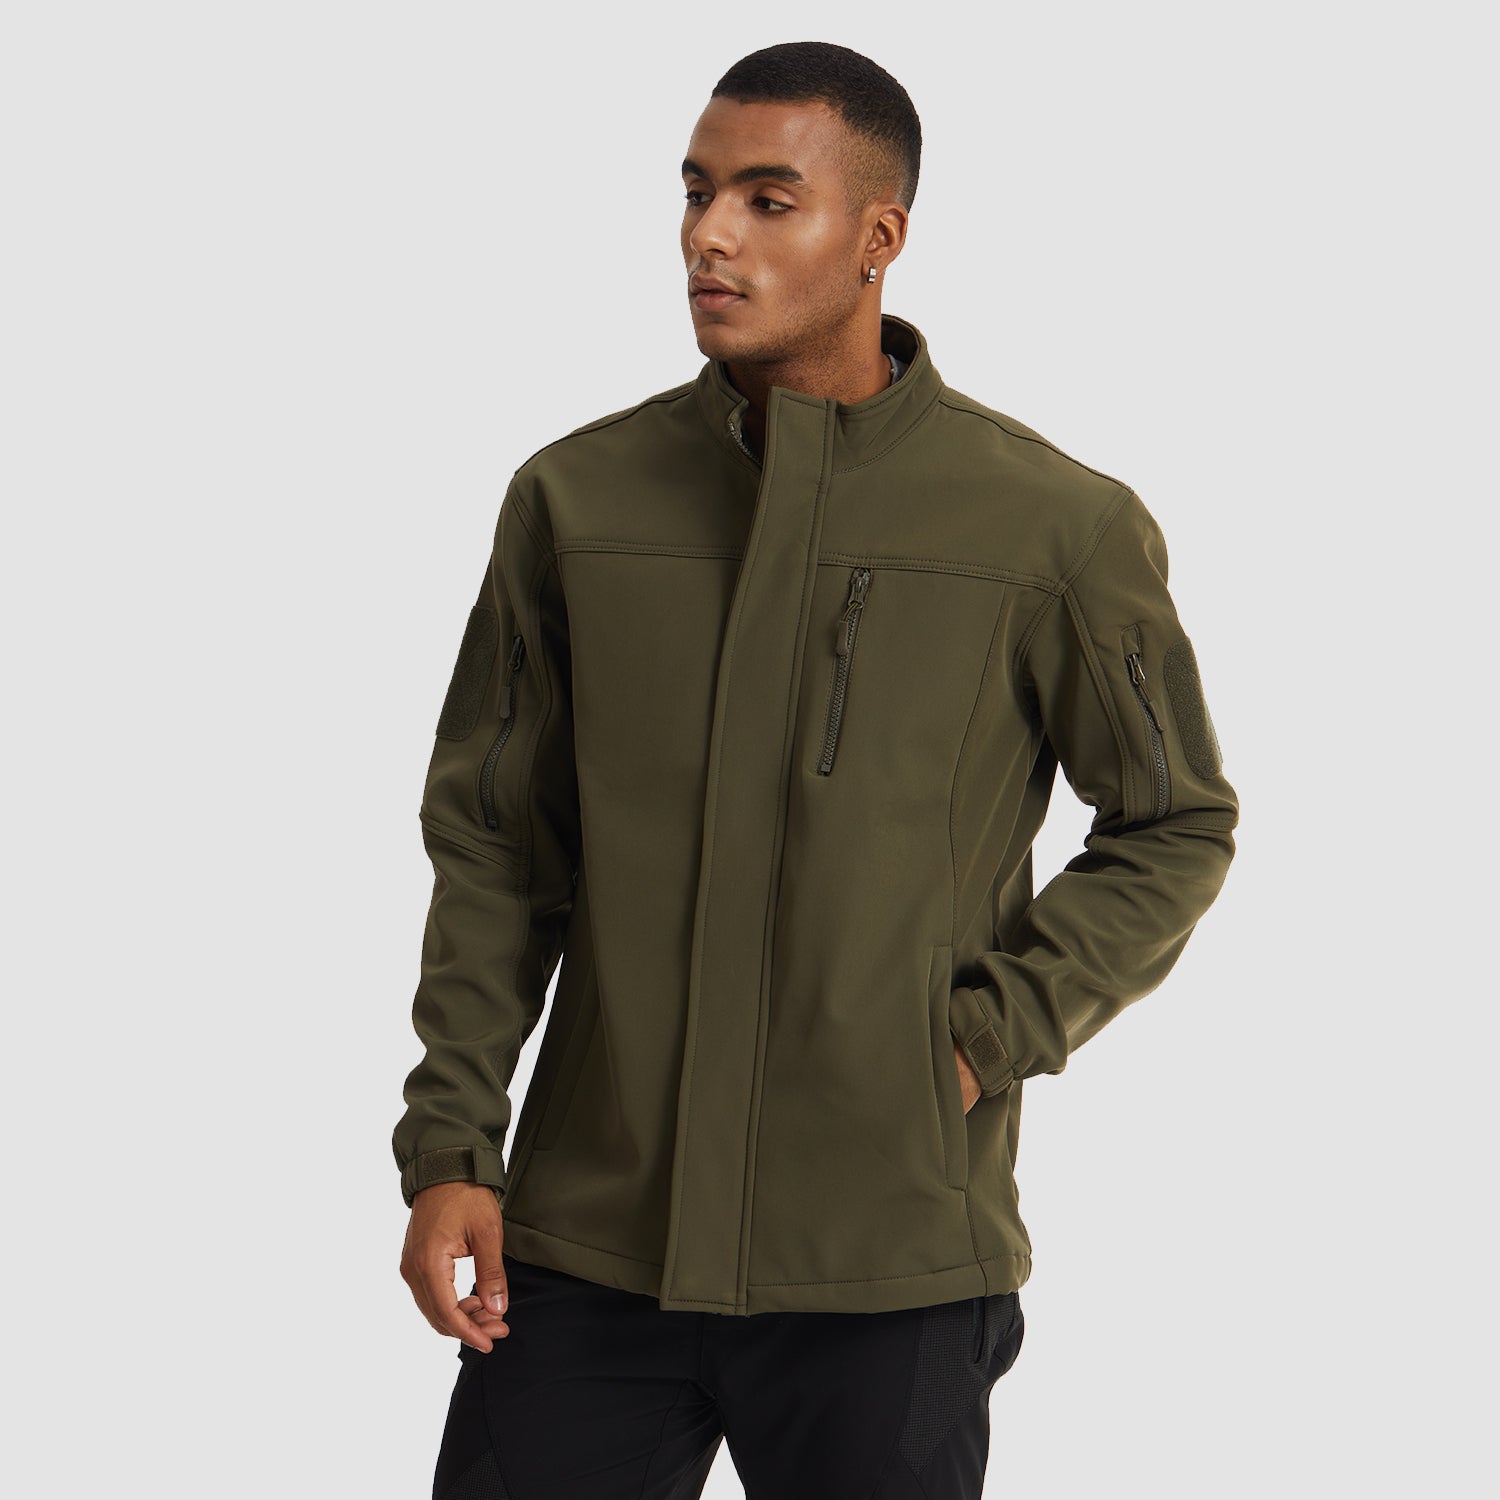 Men's Softshell Tactical Jacket Water-Resistant Fleece Lining Jacket for Outdoors, Khaki / XL